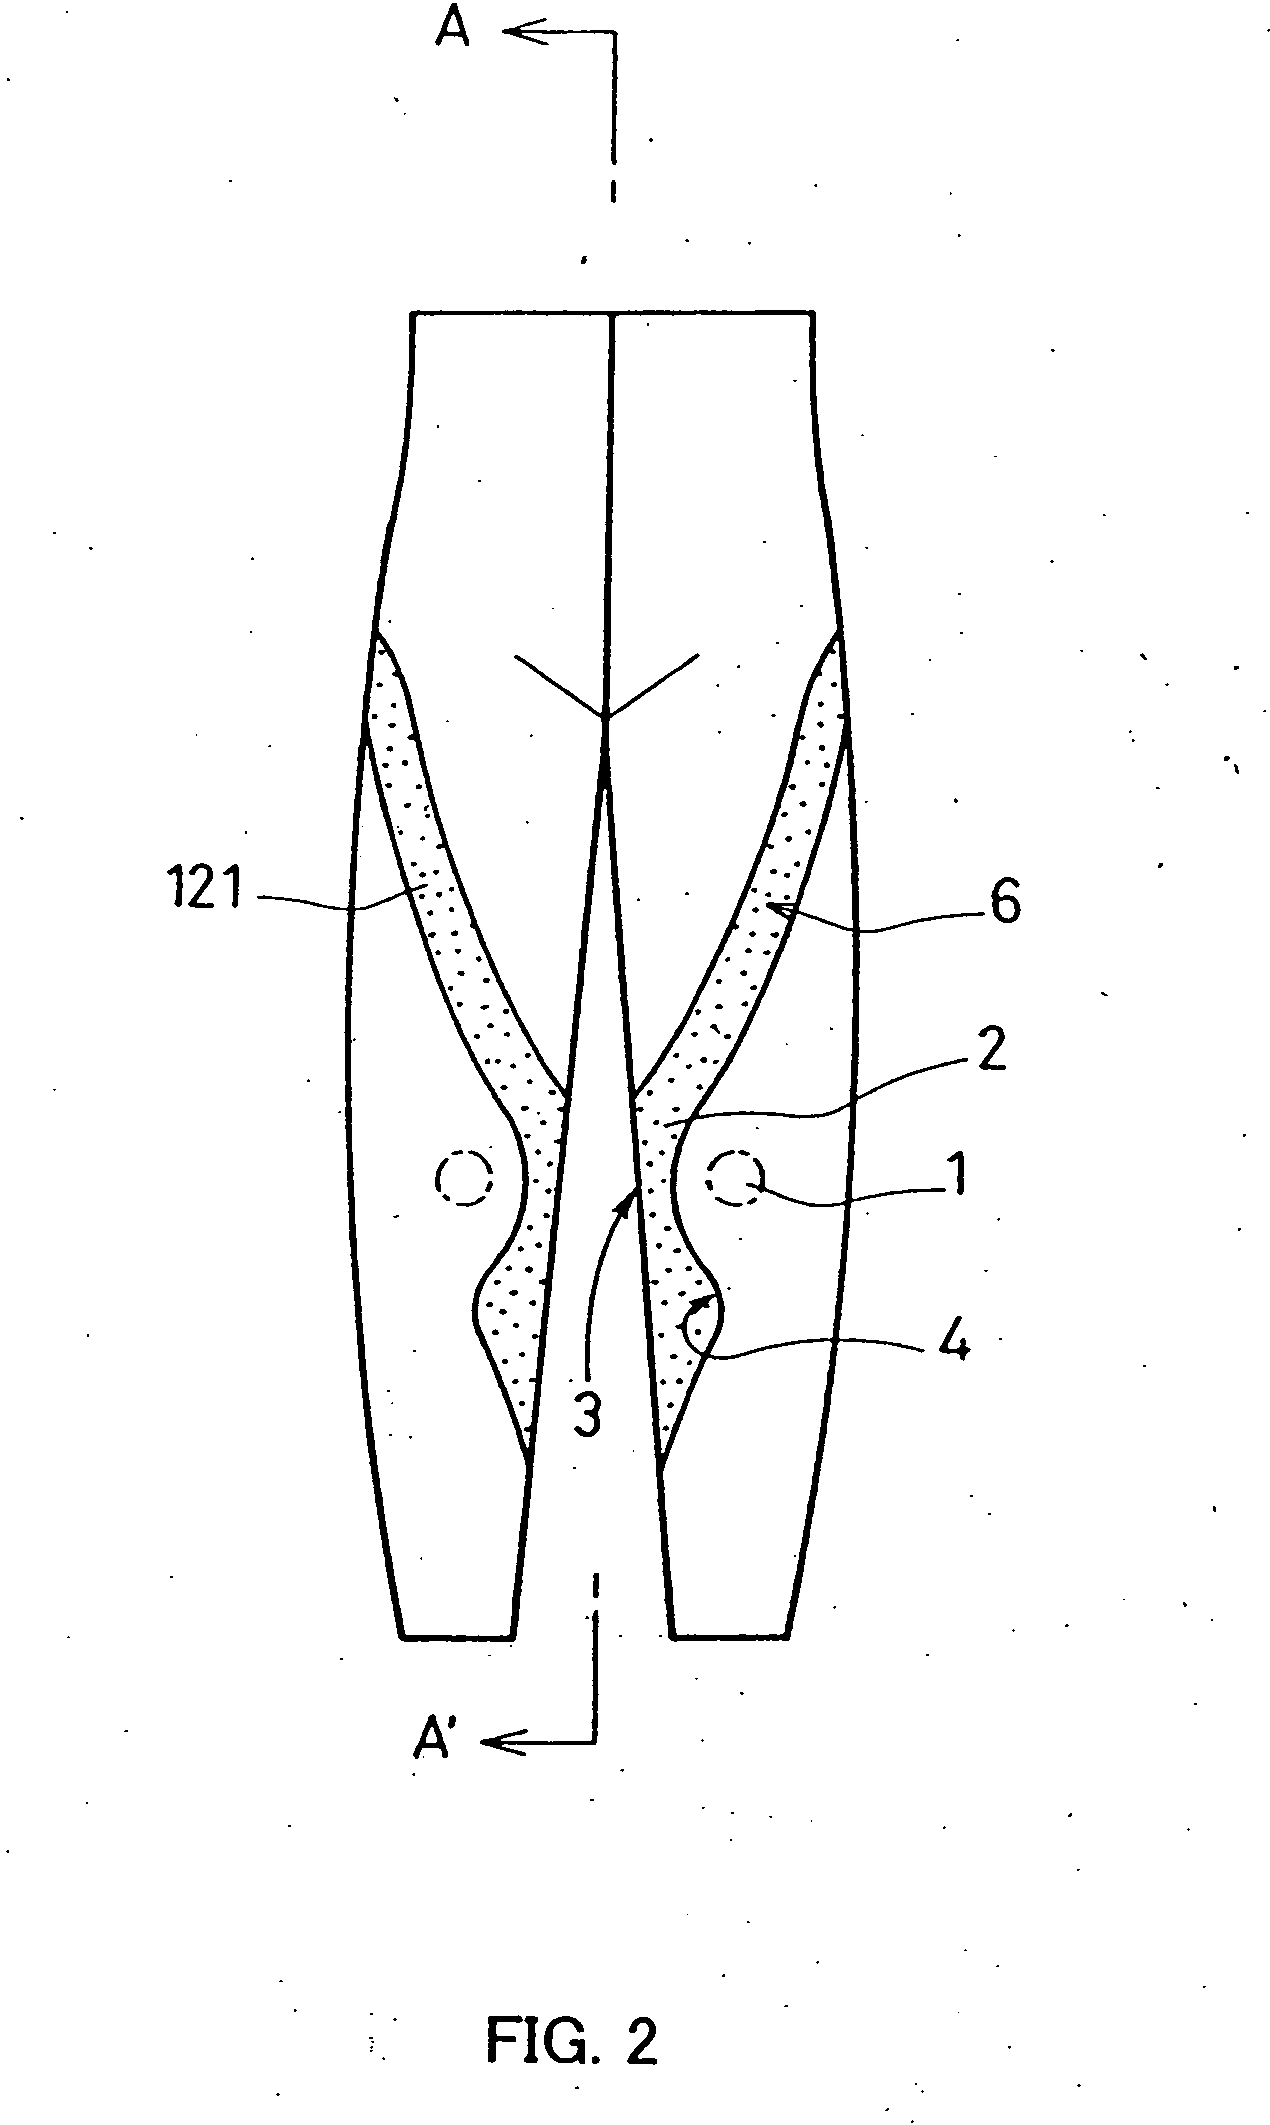 Tights-type leg support garment